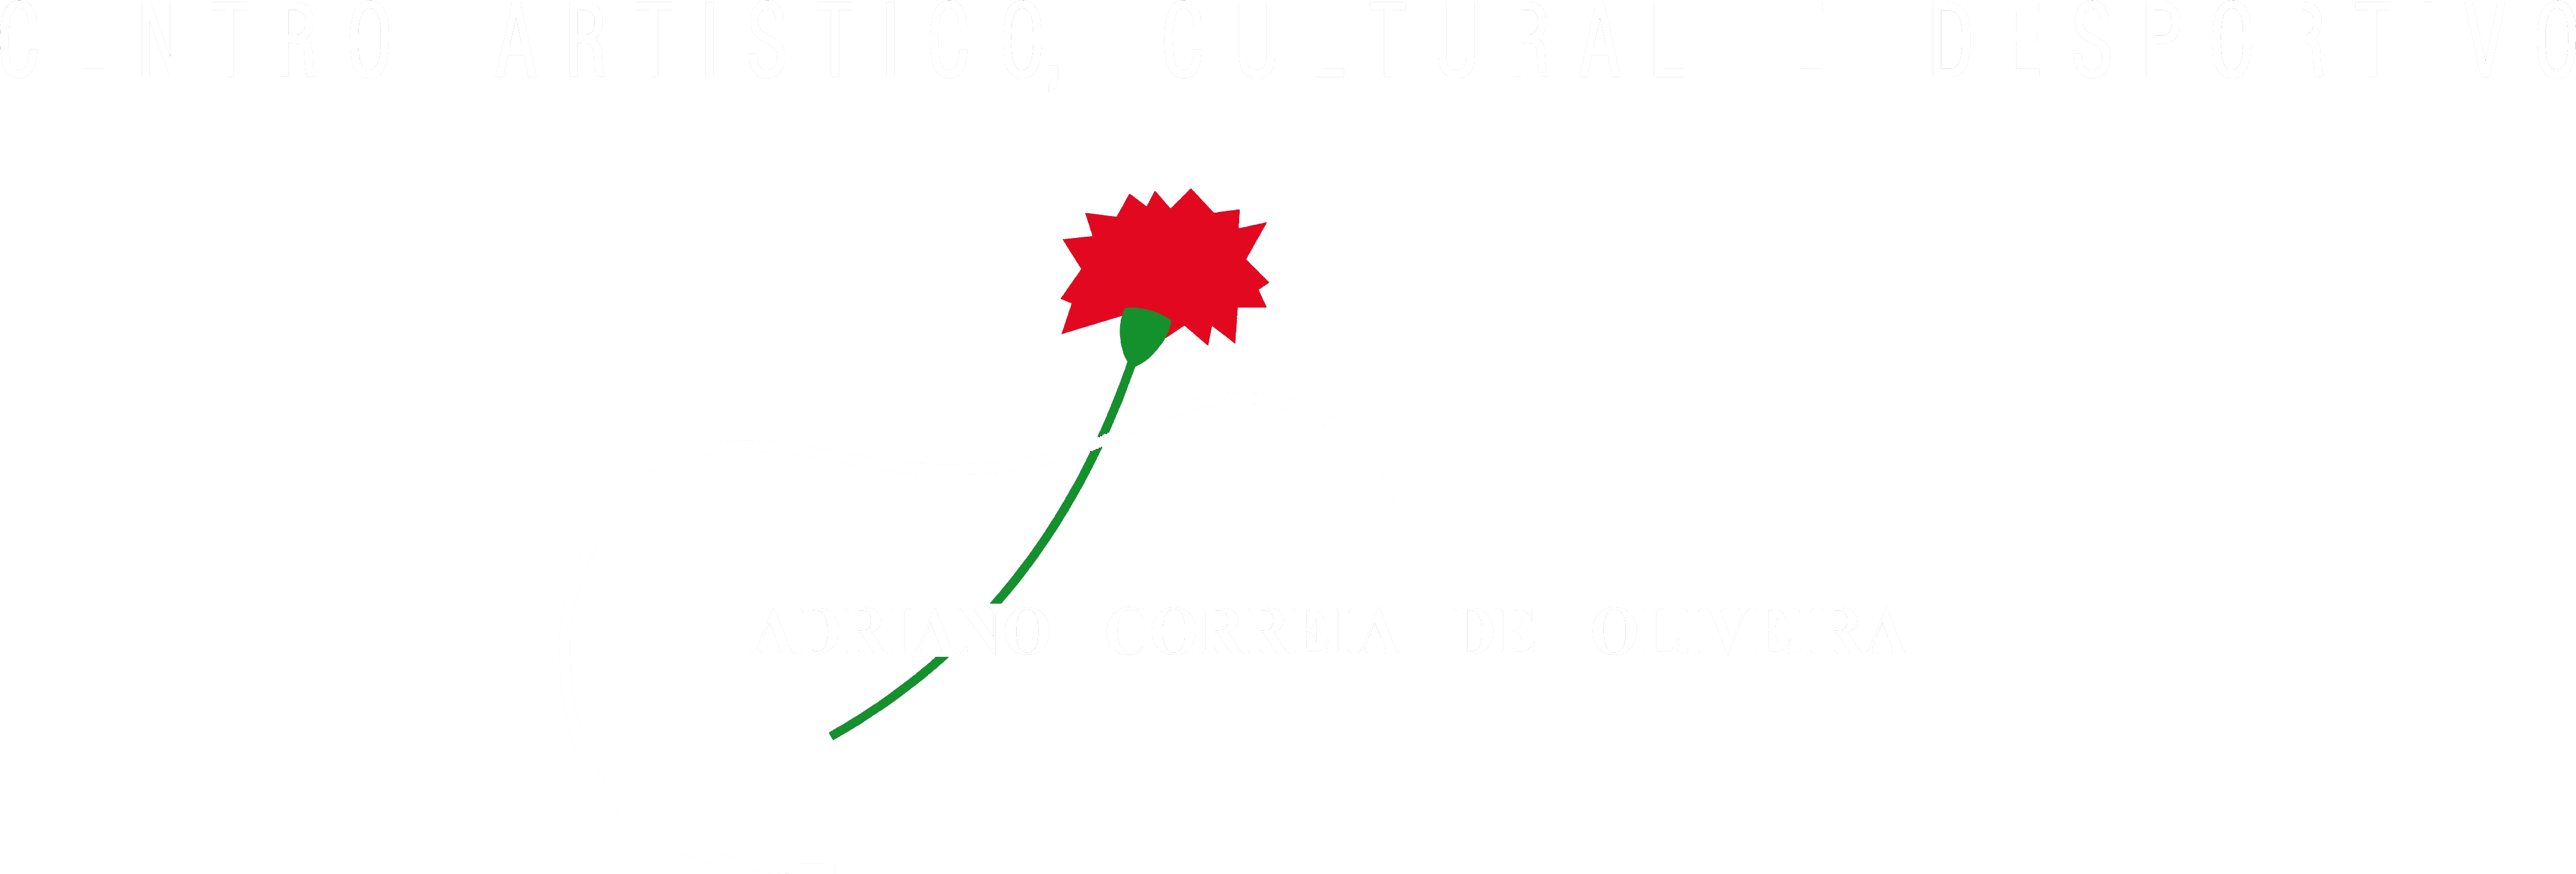 Centro Artístico Cultural e Desportivo Adriano Correia de Oliveira